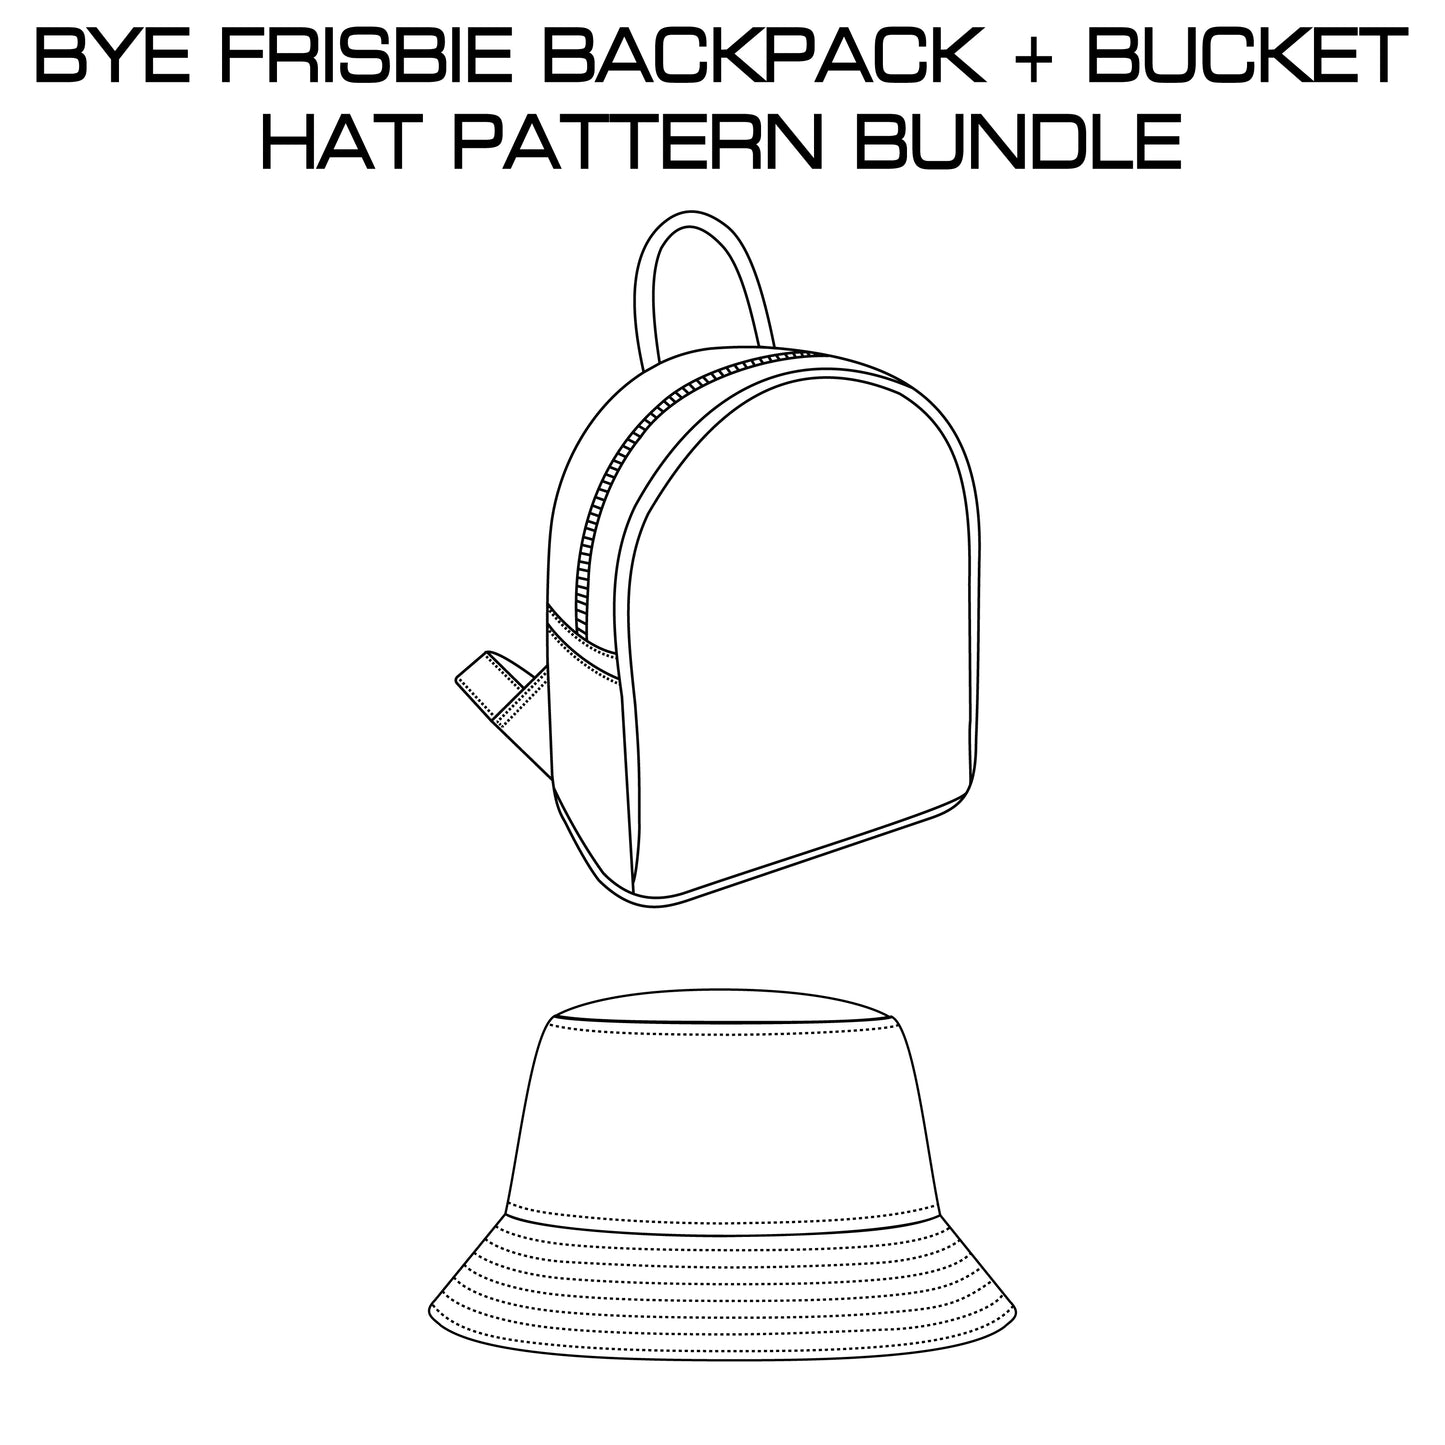 Backpack + Bucket Hat Pattern Bundle